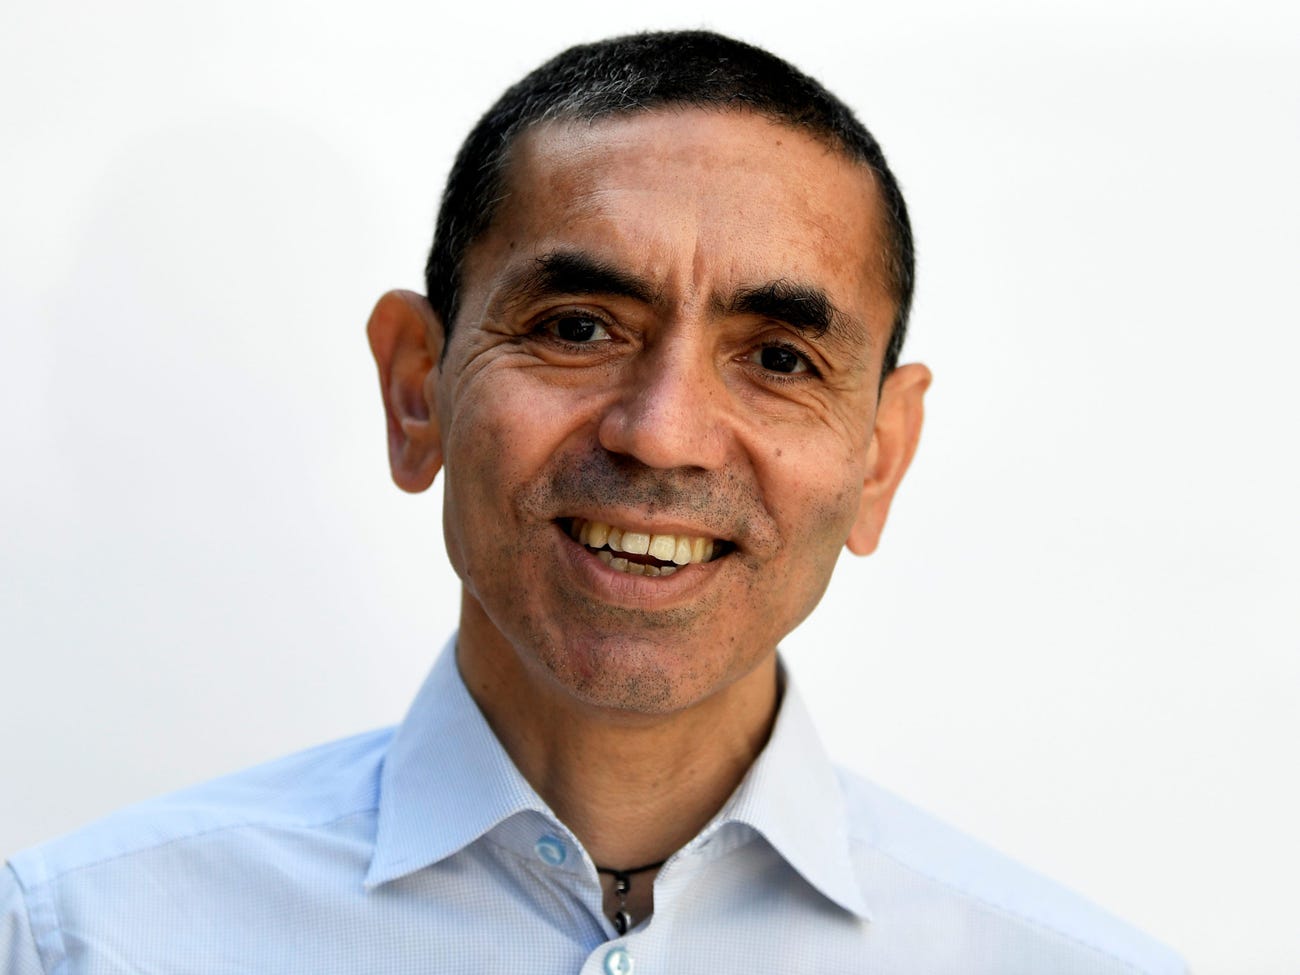 Ugur Sahin, CEO en oprichter van BioNTech